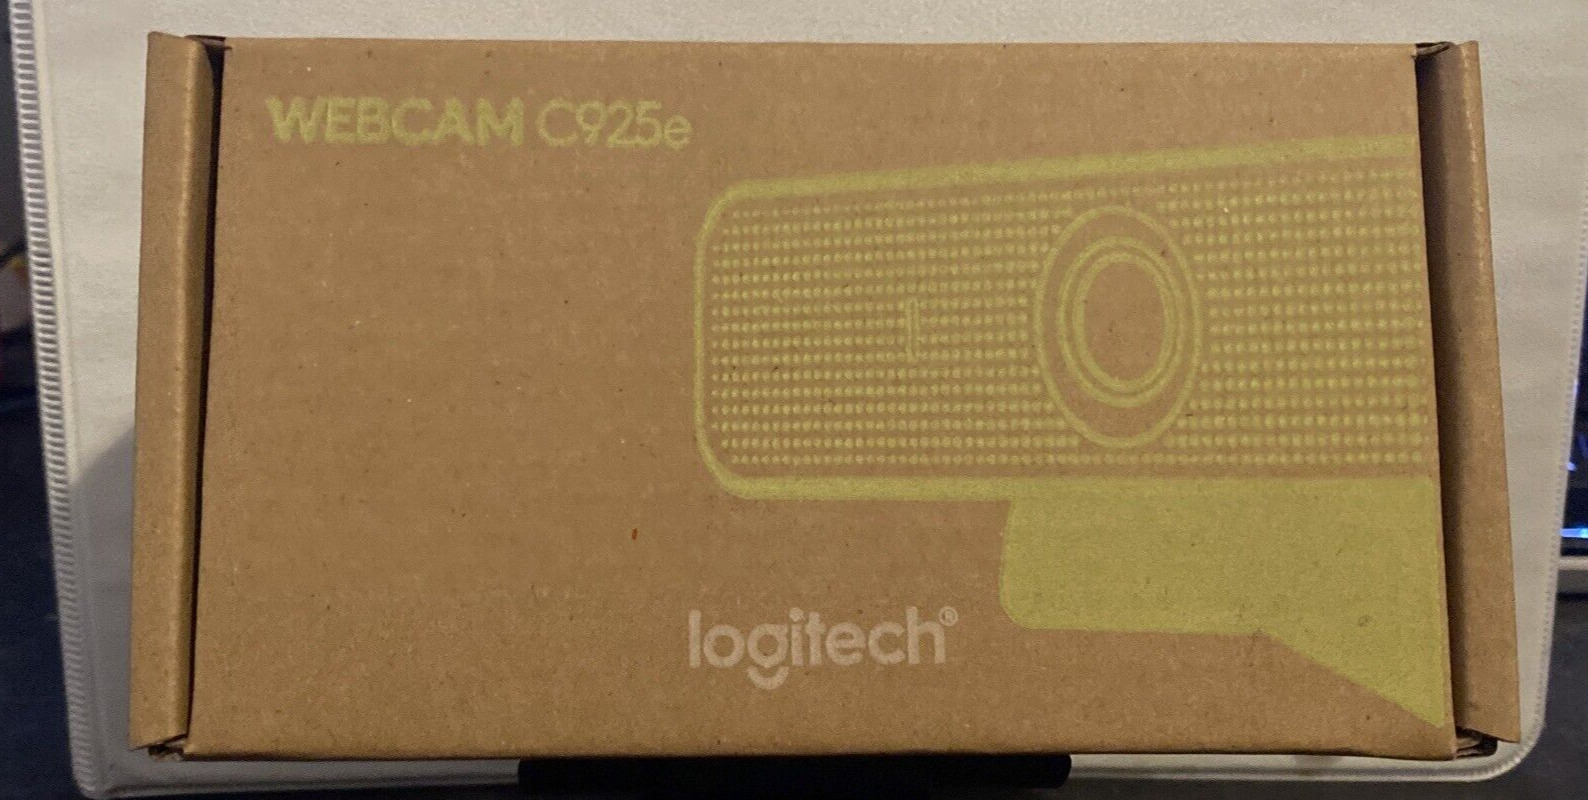 Logitech C925e Webcam Brand 960-001075 Full HD 1080 Webcam w/Mic NEW SEALED